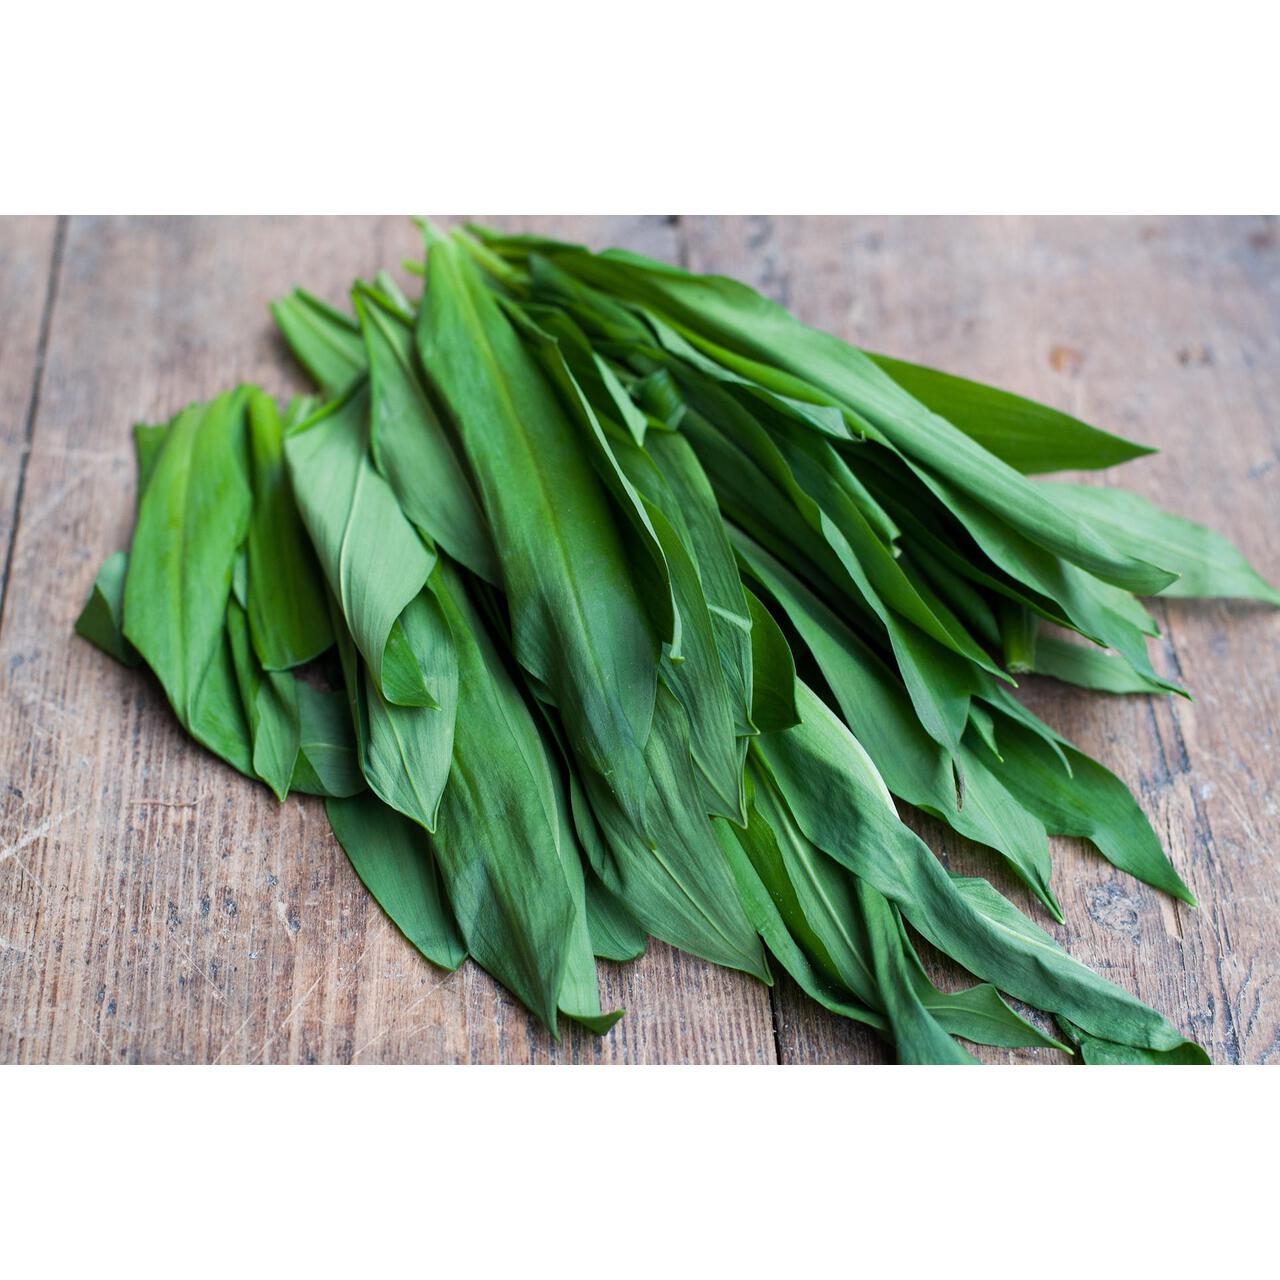 Natoora British Wild Garlic Leaves 75g